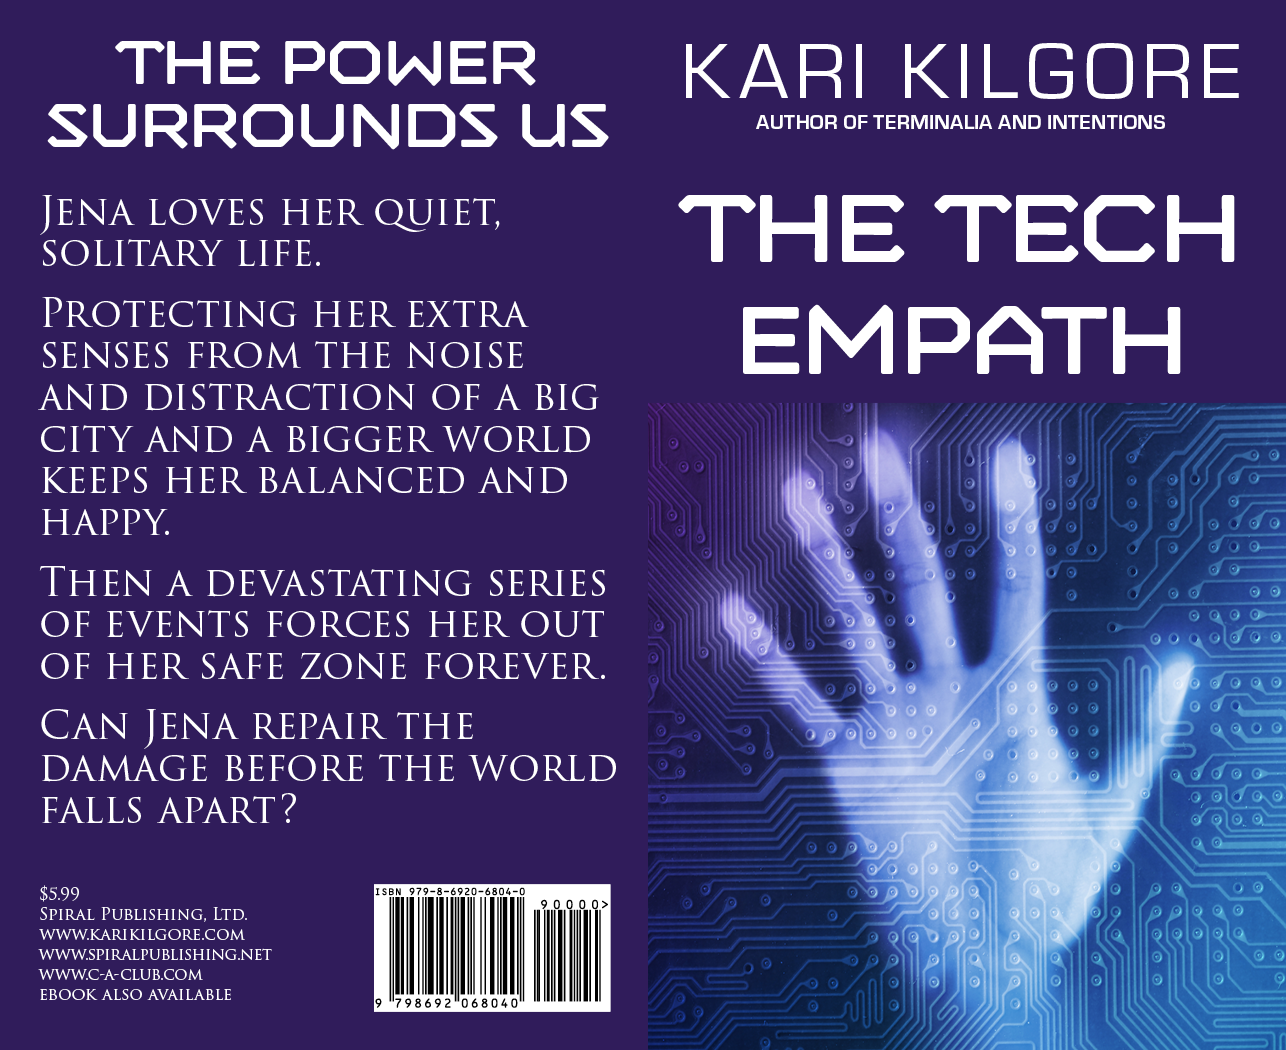 The Tech Empath